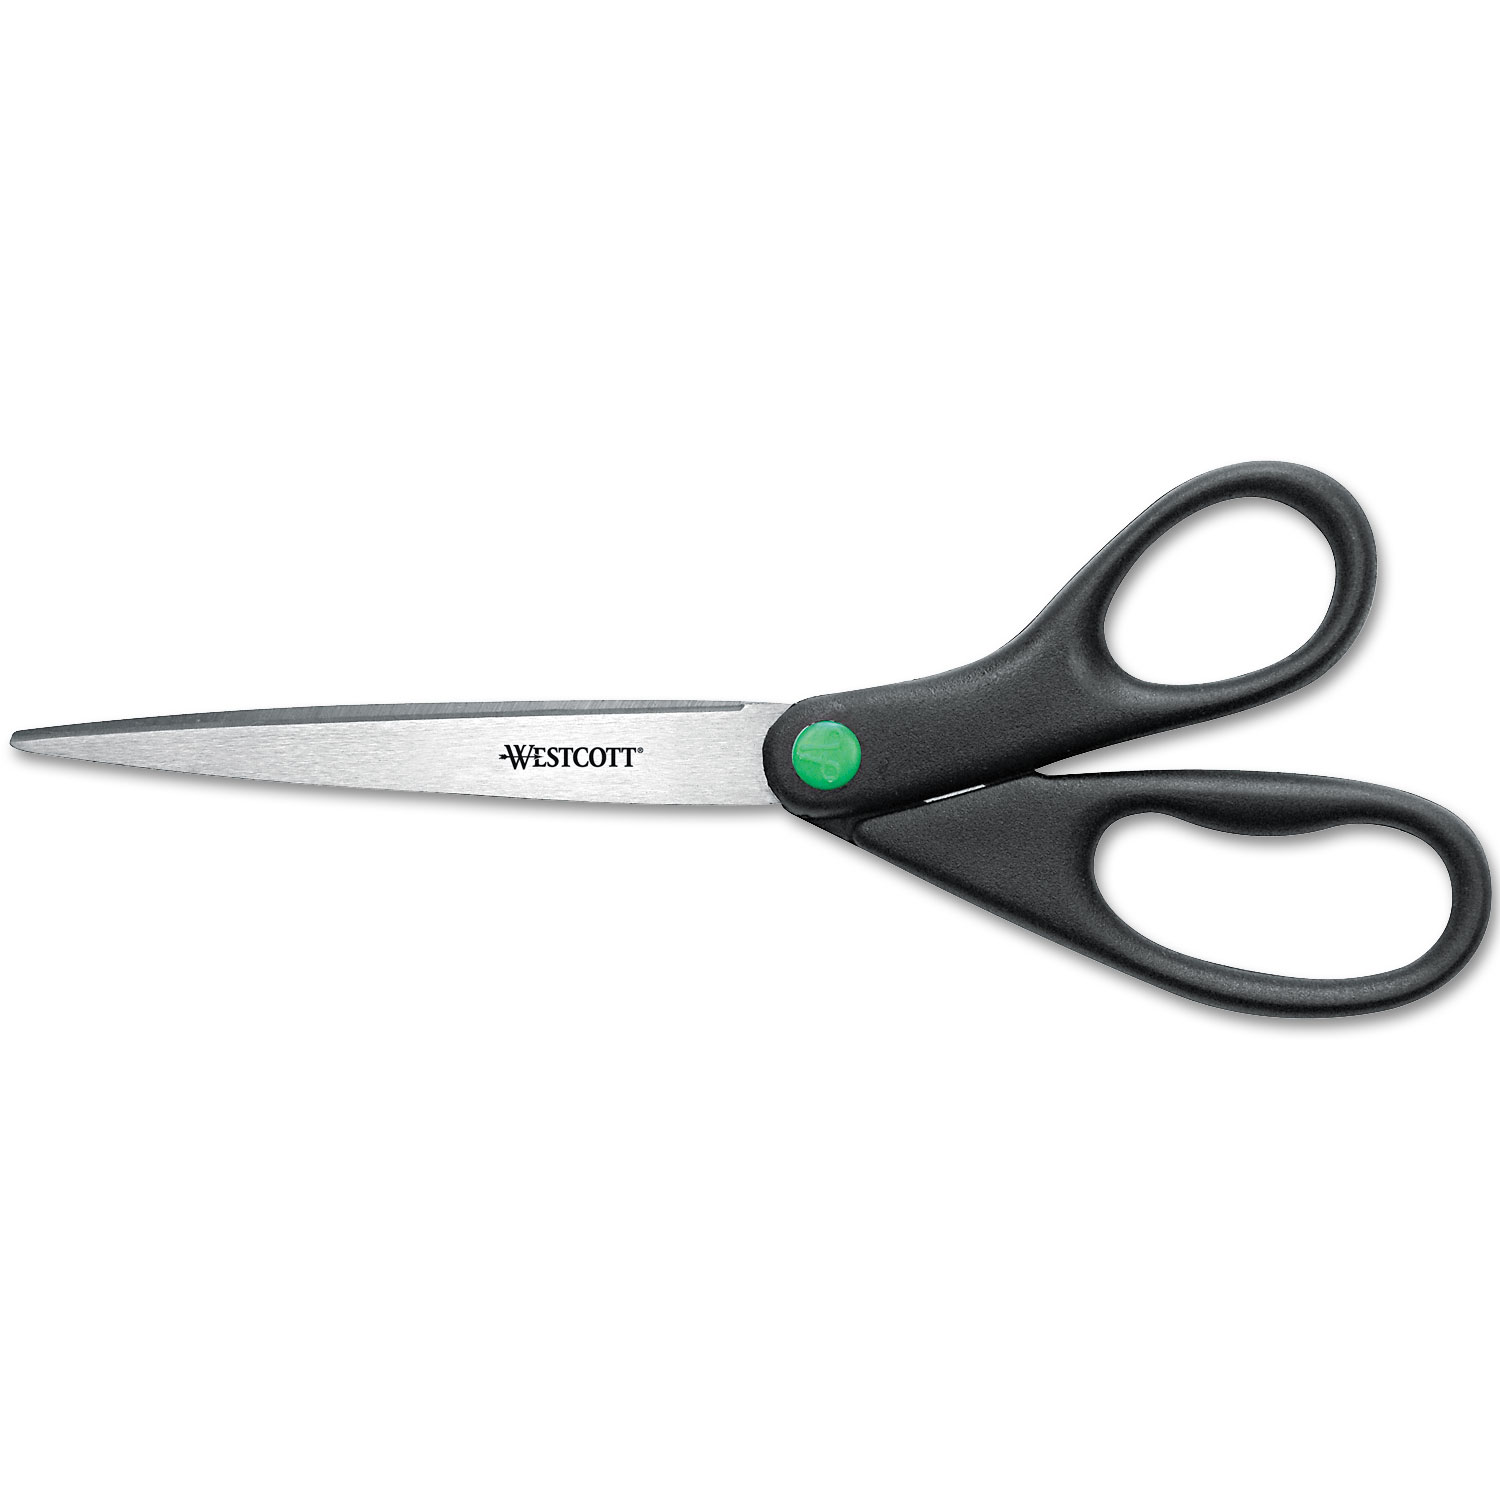 Westcott ACM13138 KleenEarth Recycled Scissors, Black, 9" Long